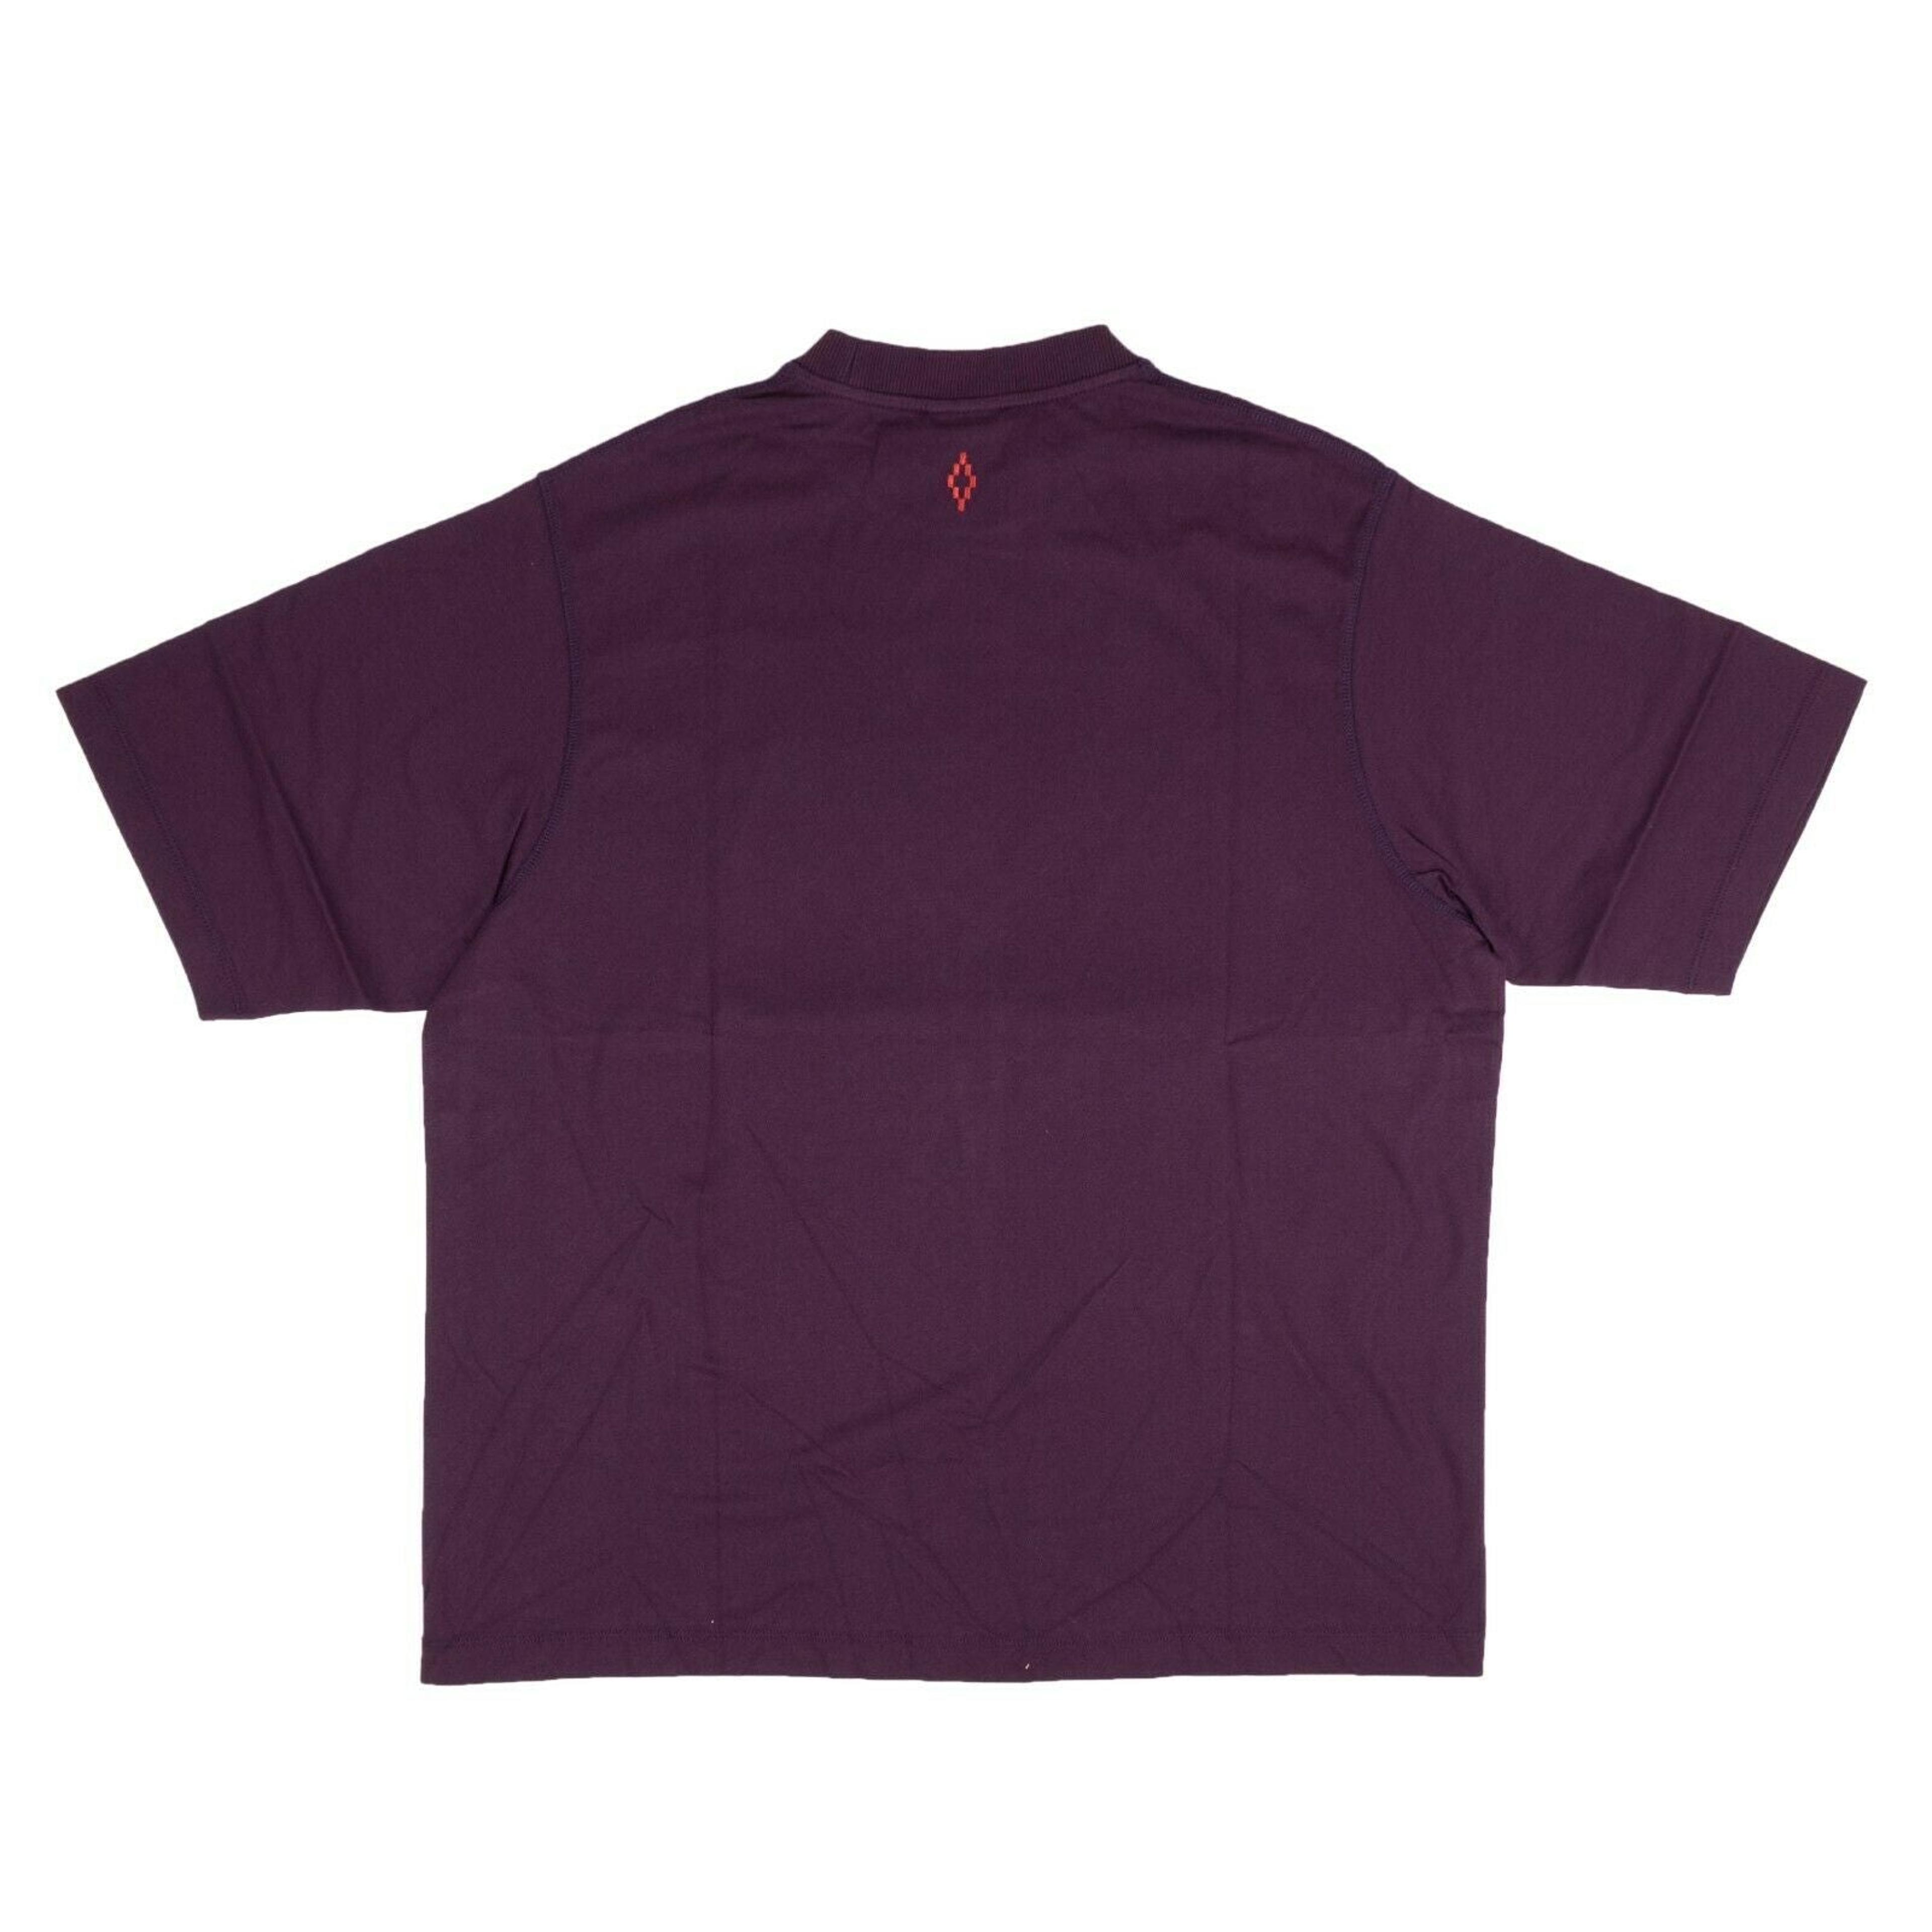 Alternate View 1 of Marcelo Burlon Graphic T-Shirt - Purple